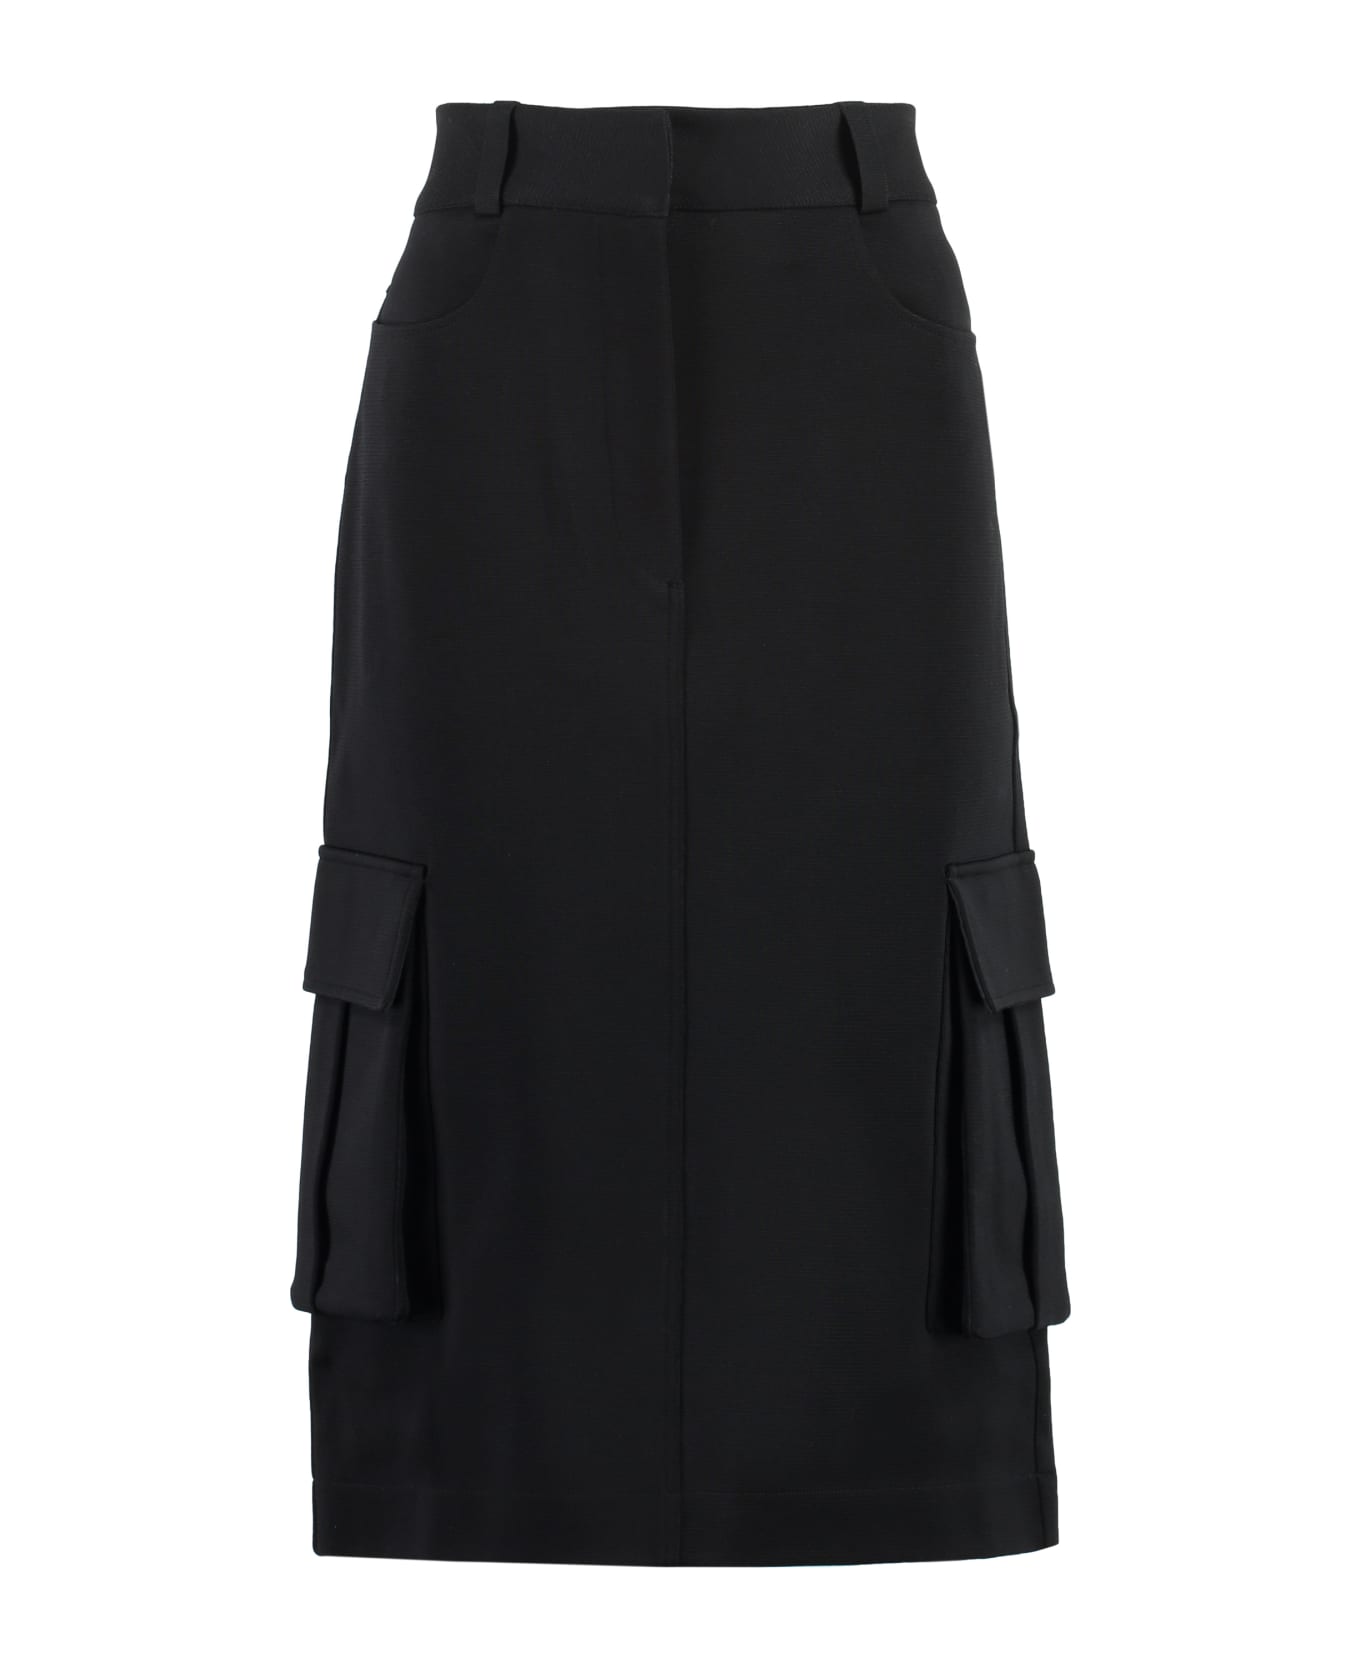 Givenchy Technical Fabric Skirt - black